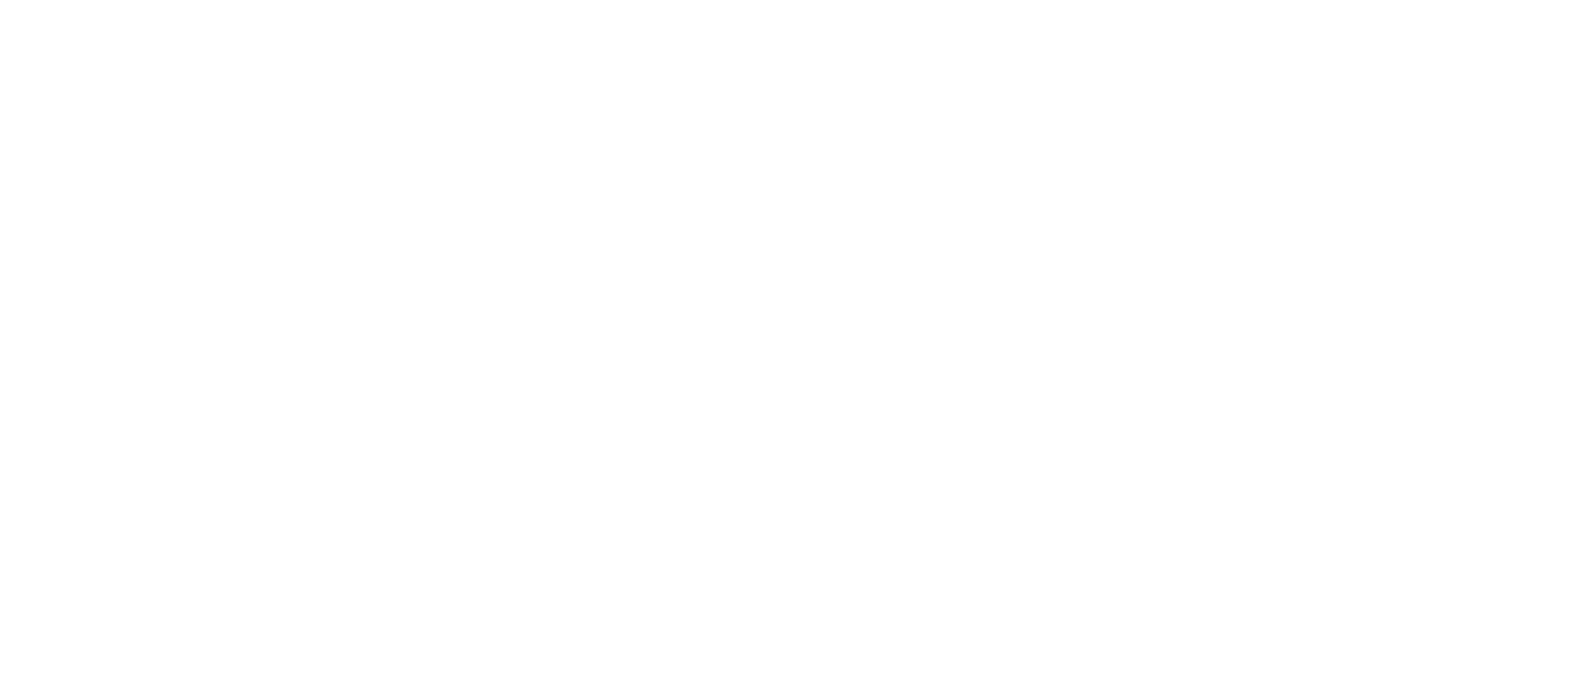 EDF (Electricité de France) logo large for dark backgrounds (transparent PNG)